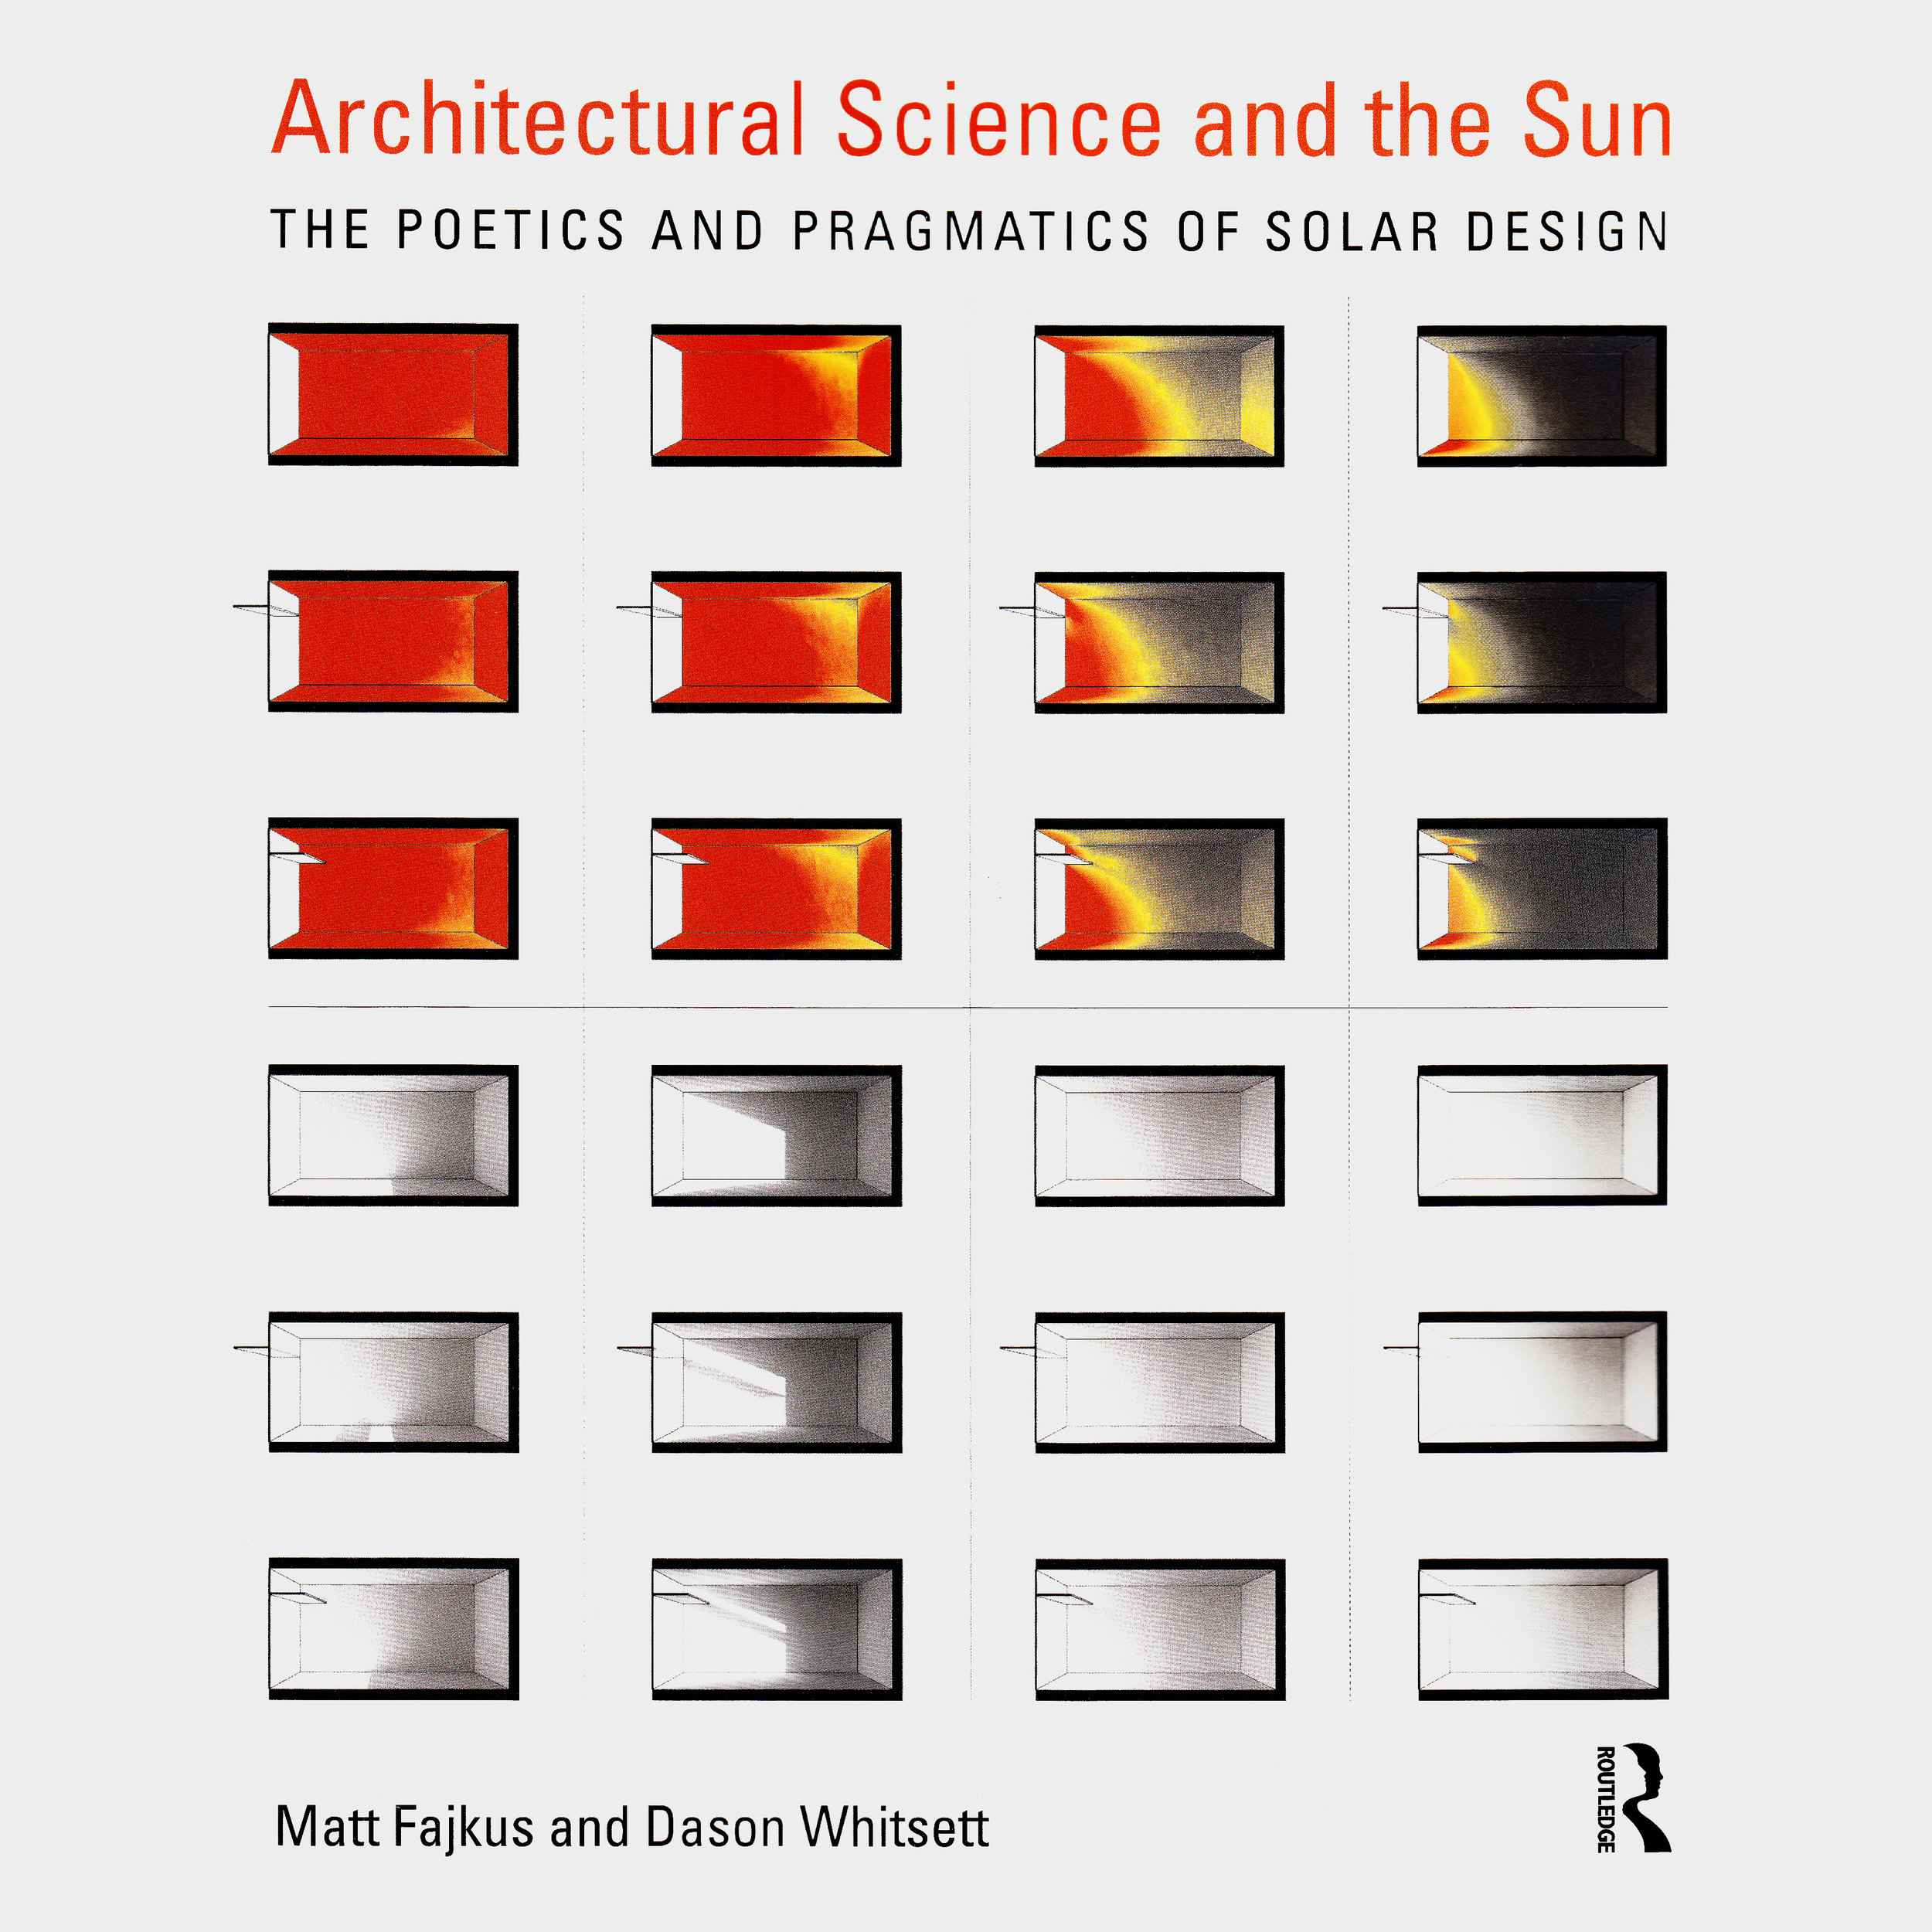 Architectural Science and the Sun by Matt Fajkus and Dason Whitsett-3.jpg